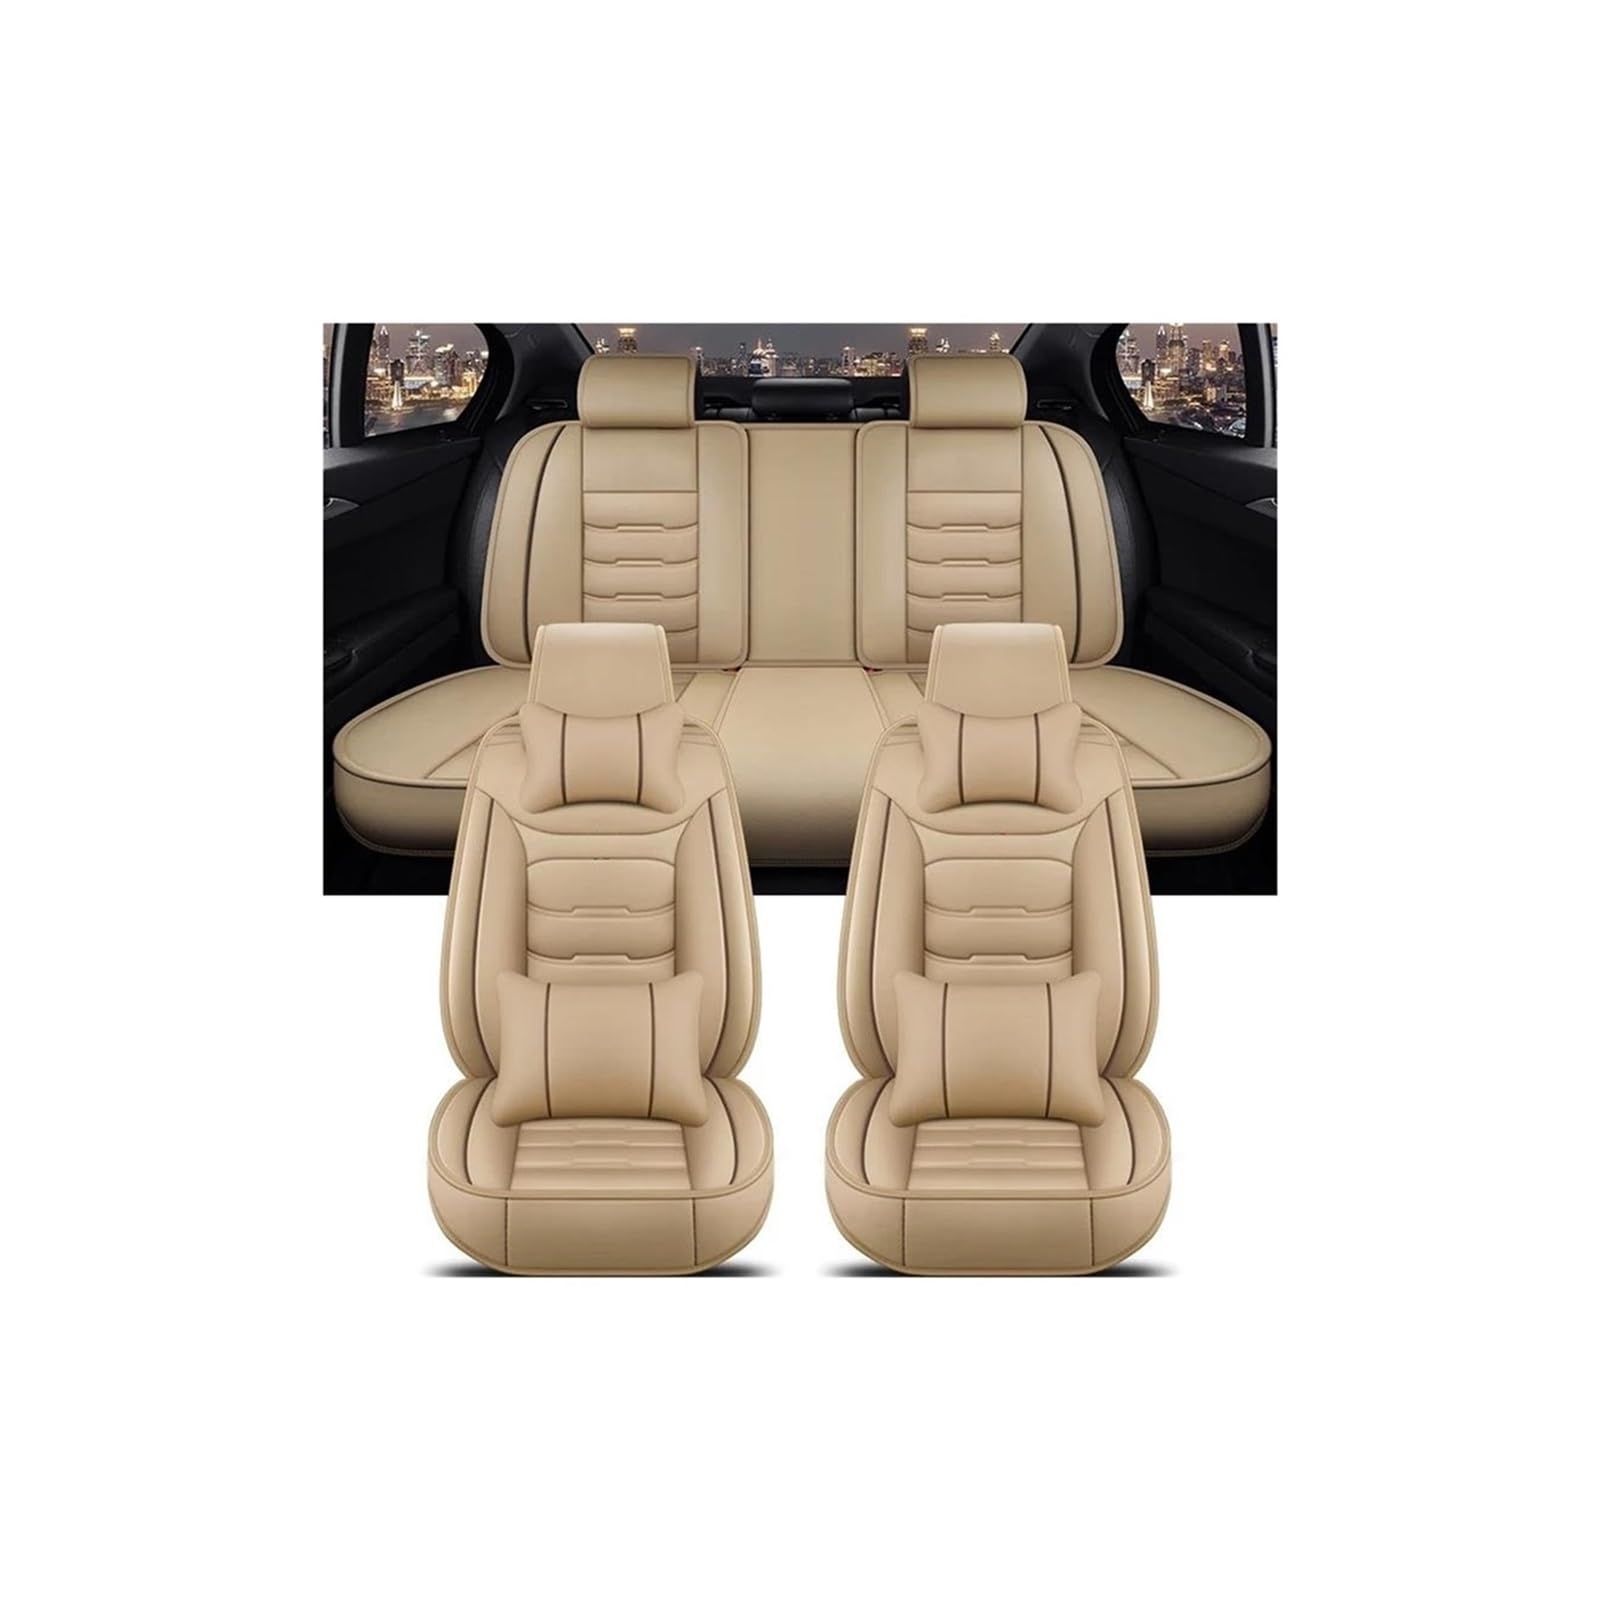 YIJIAVSX Auto-Sitzbezüge Auto-Sitzbodenschutzmatte Für Mercedes C-Klasse W202 W203 W204 W205 A205 C204 C205 S202 S203 S204 S205 Rücksitzbezüge(11) von YIJIAVSX